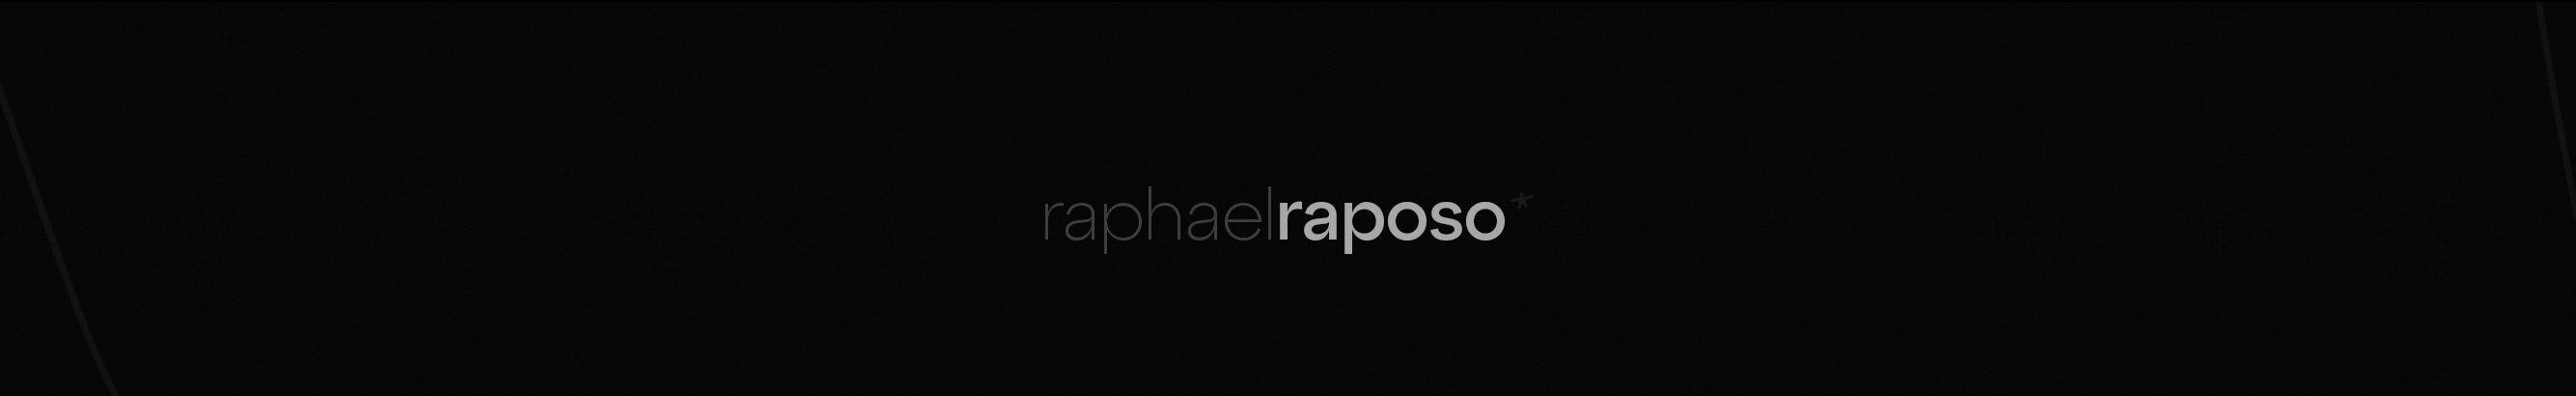 Raphael Raposo :: Behance